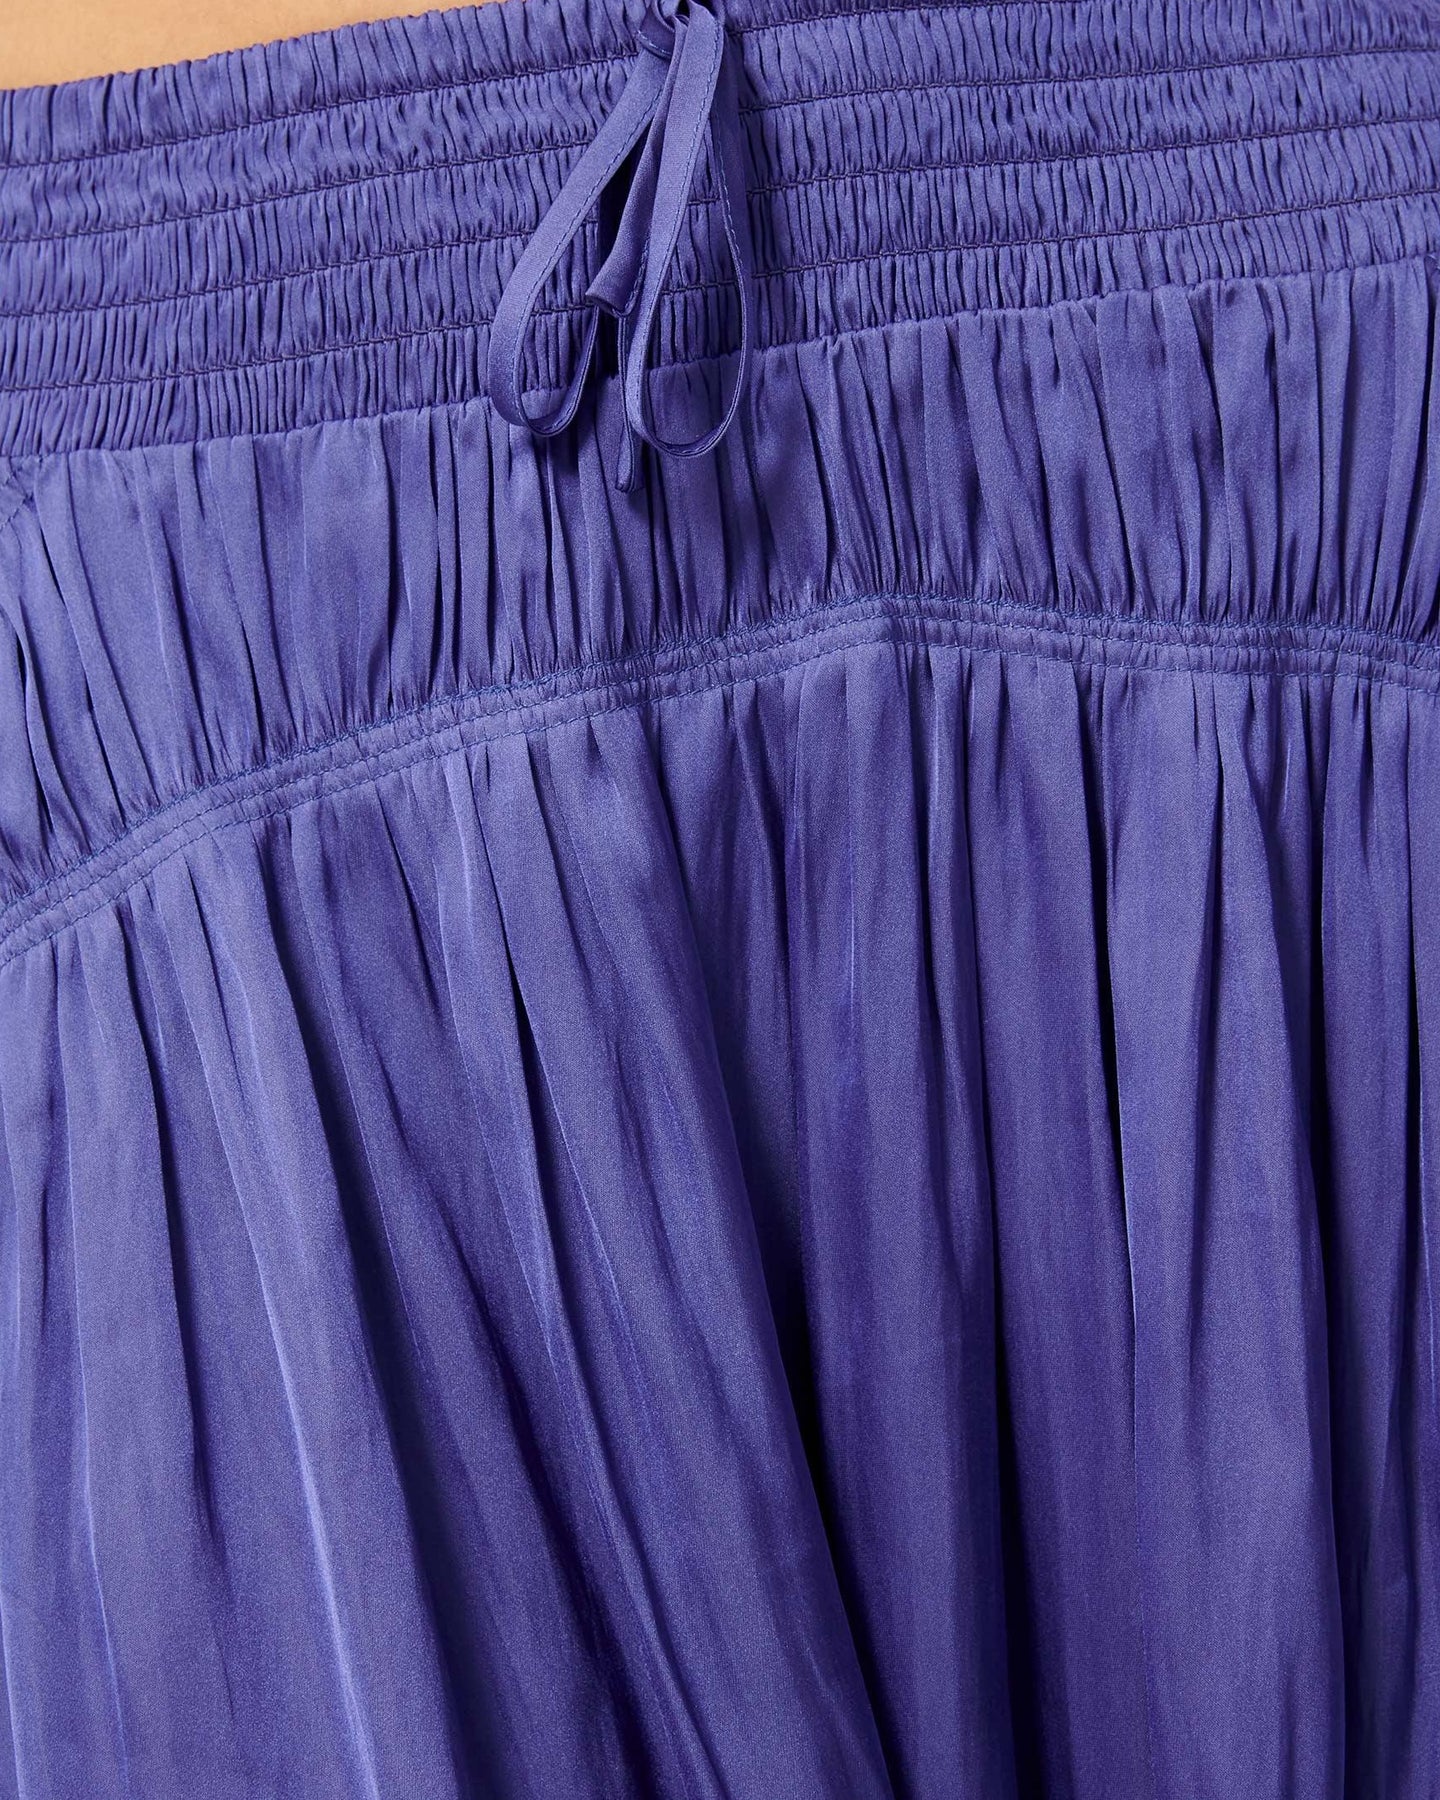 Skirt Genina Lavender-Blue